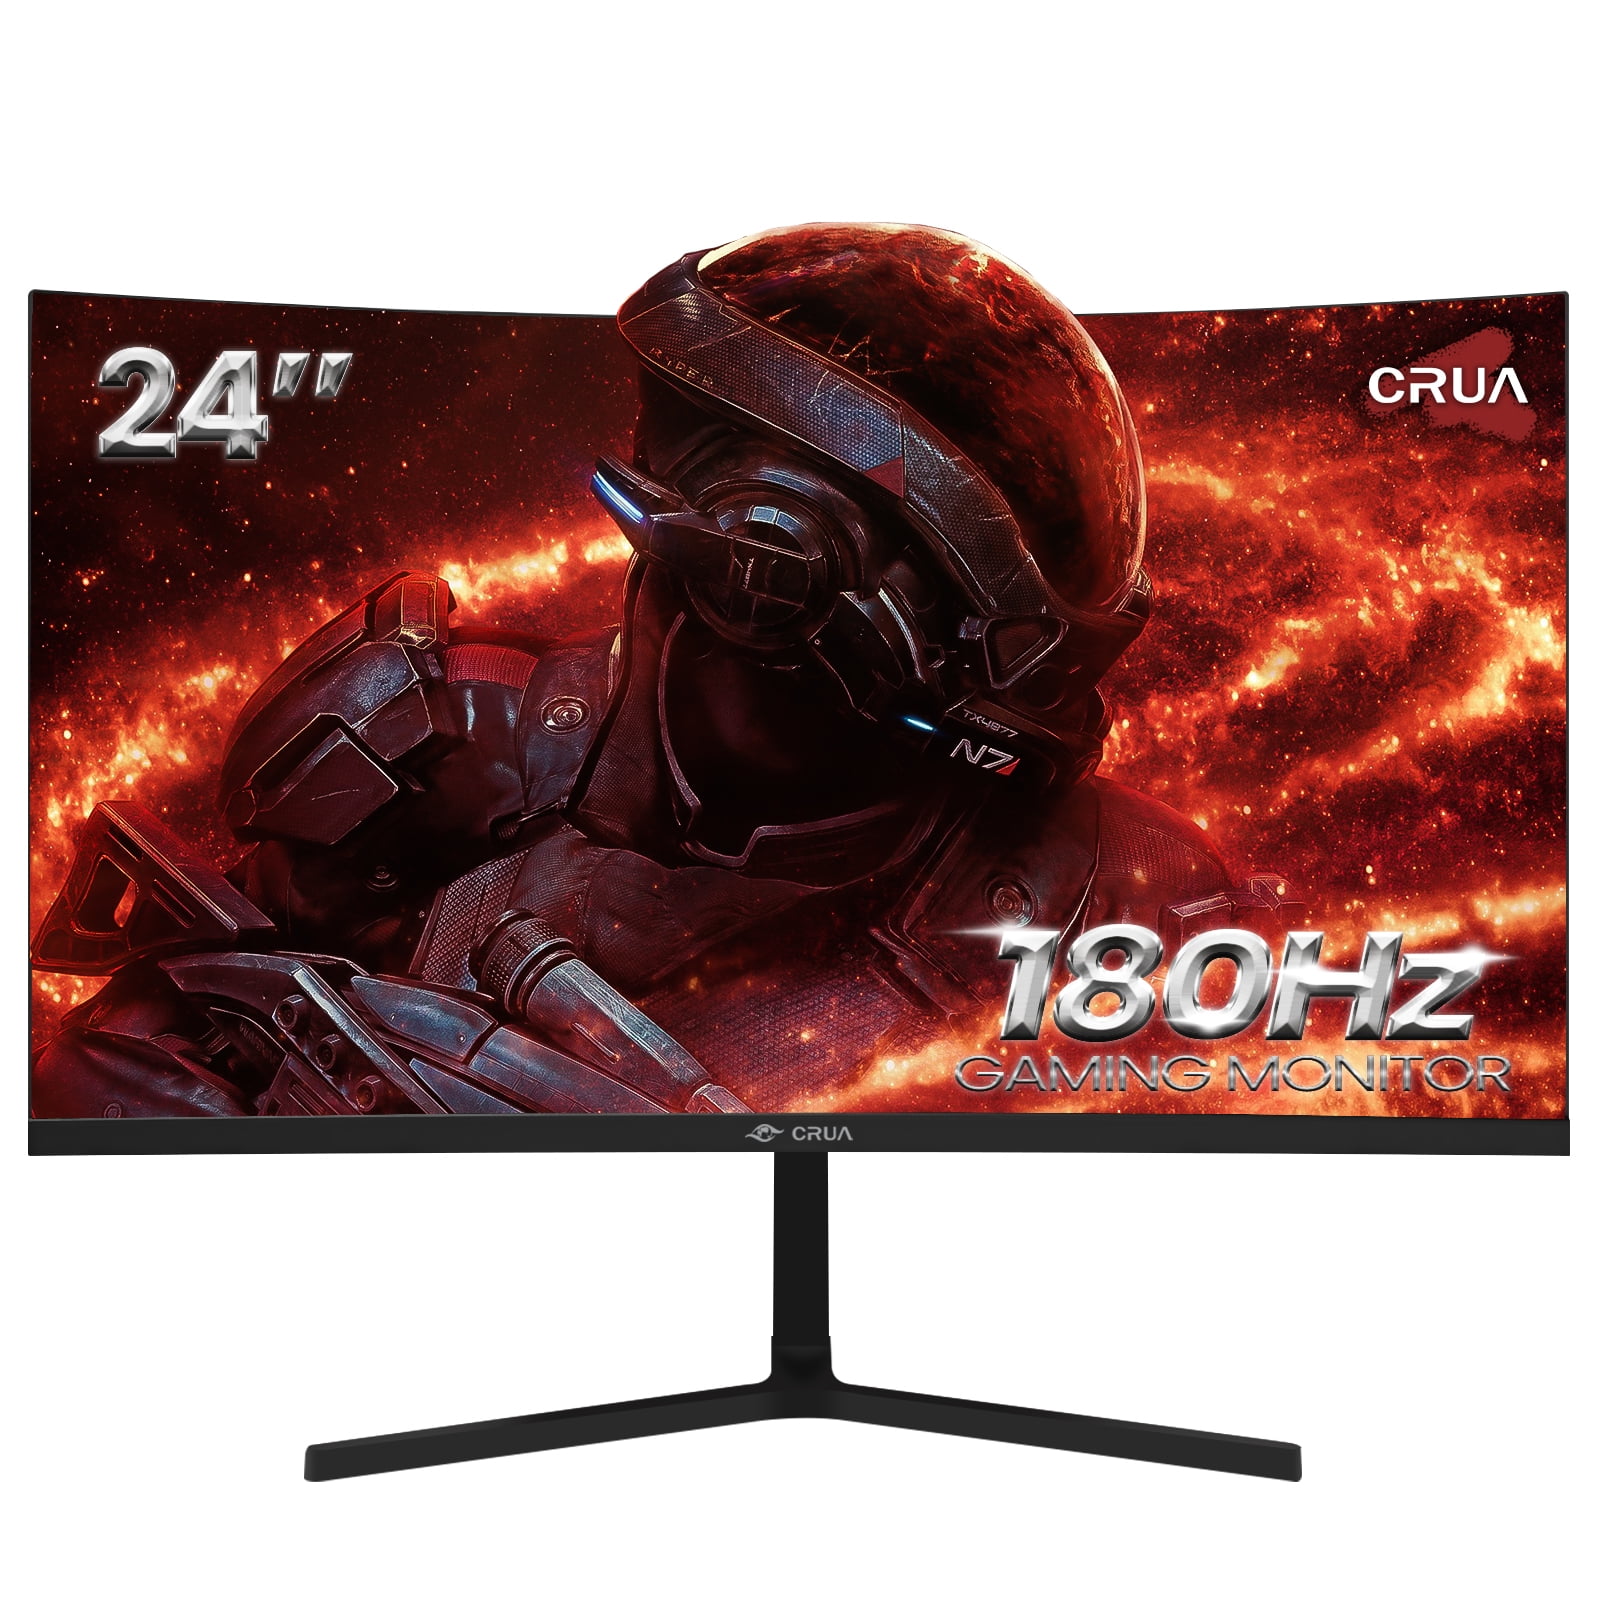 CRUA 24 165Hz/180Hz Curved Gaming Monitor - FHD 1080P Frameless Computer  Monitor, AMD FreeSync, Low Motion Blur,DP&HDMI Port, Black